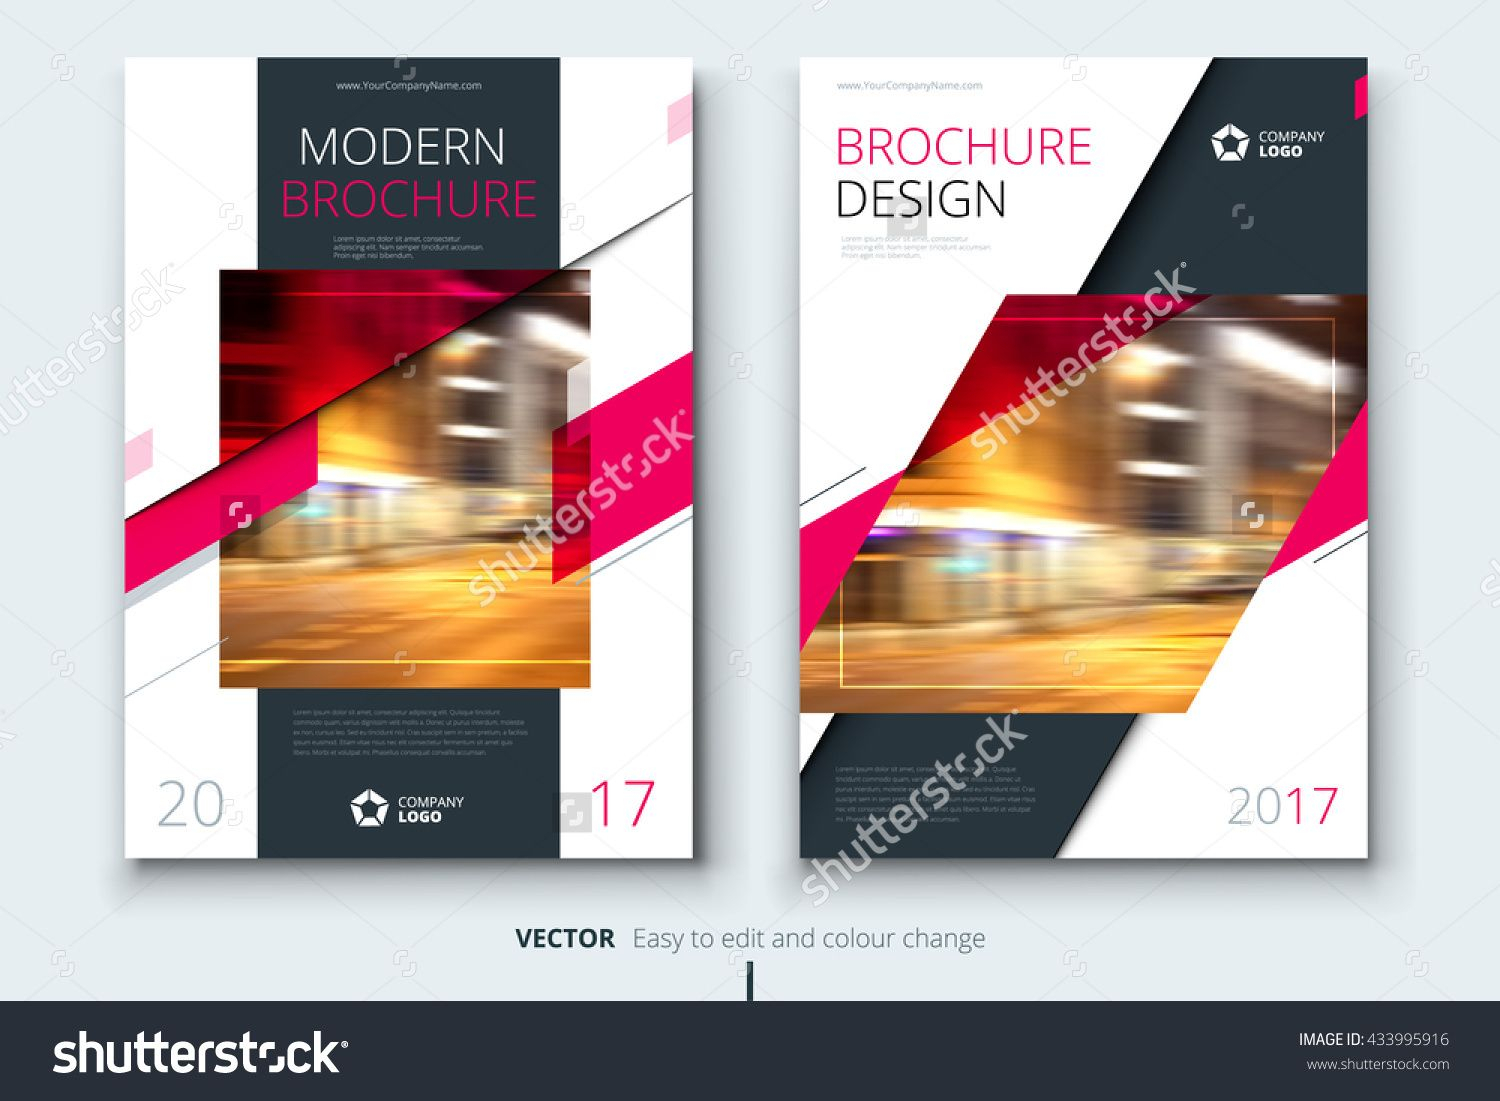 Pink Brochure Design, Modern Brochure Template, Brochures For E Brochure Design Templates